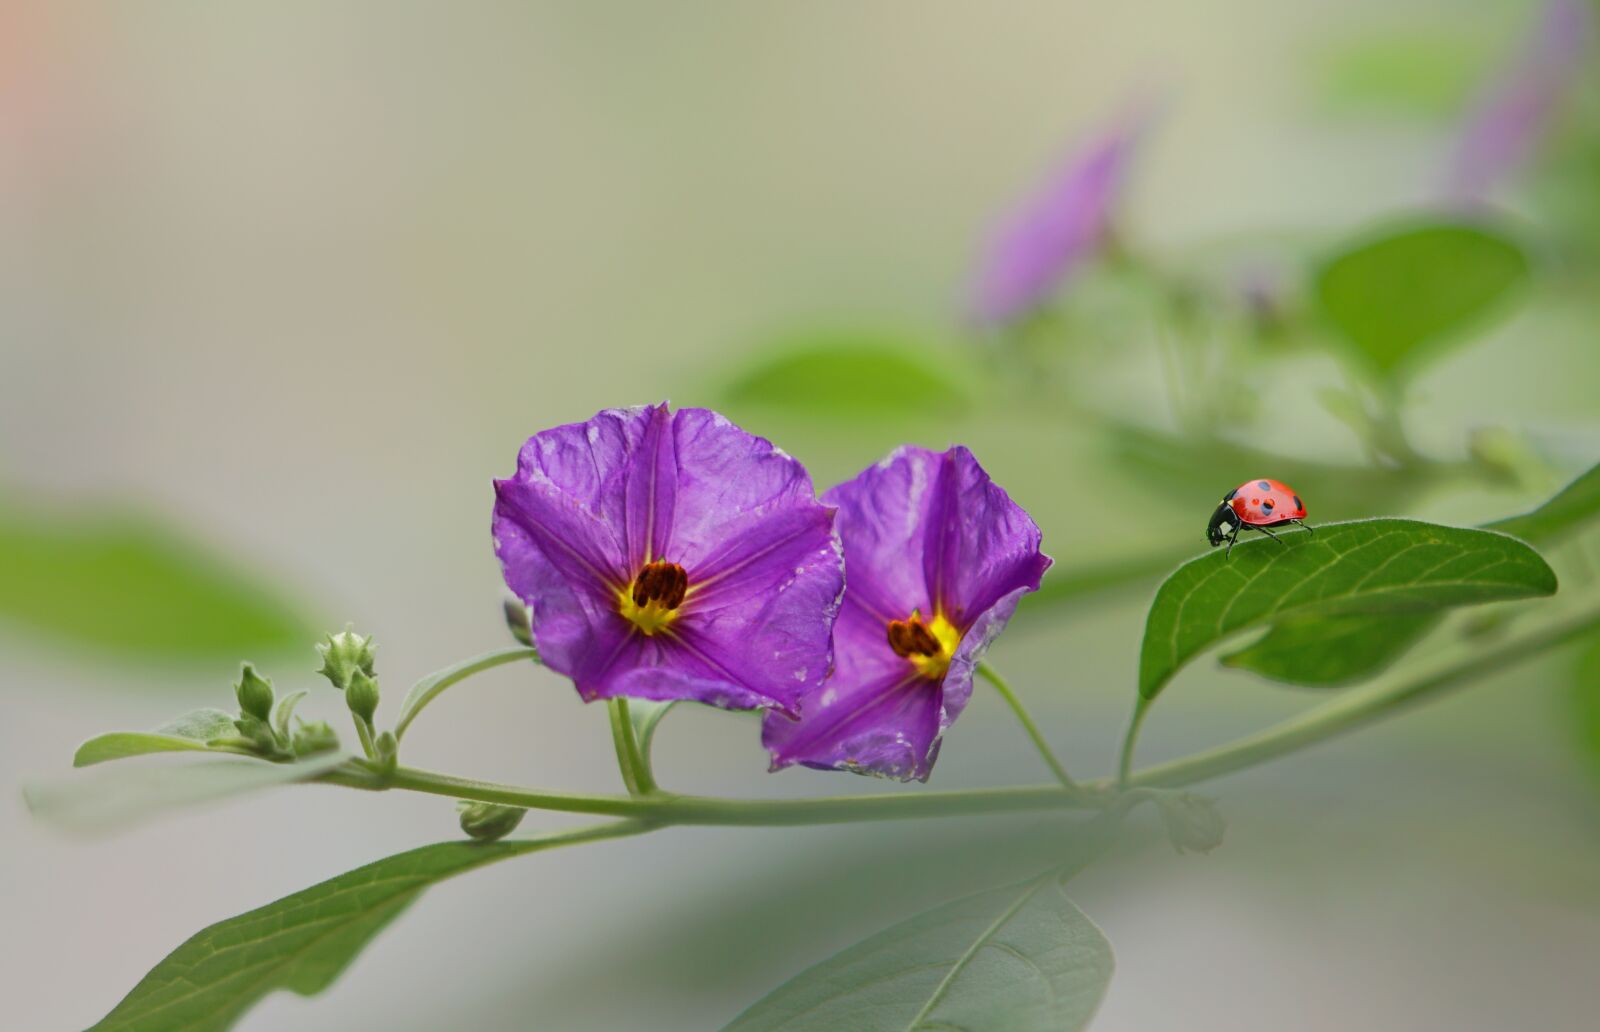 Sony a6300 sample photo. Flowers, ladybugs, nature photography